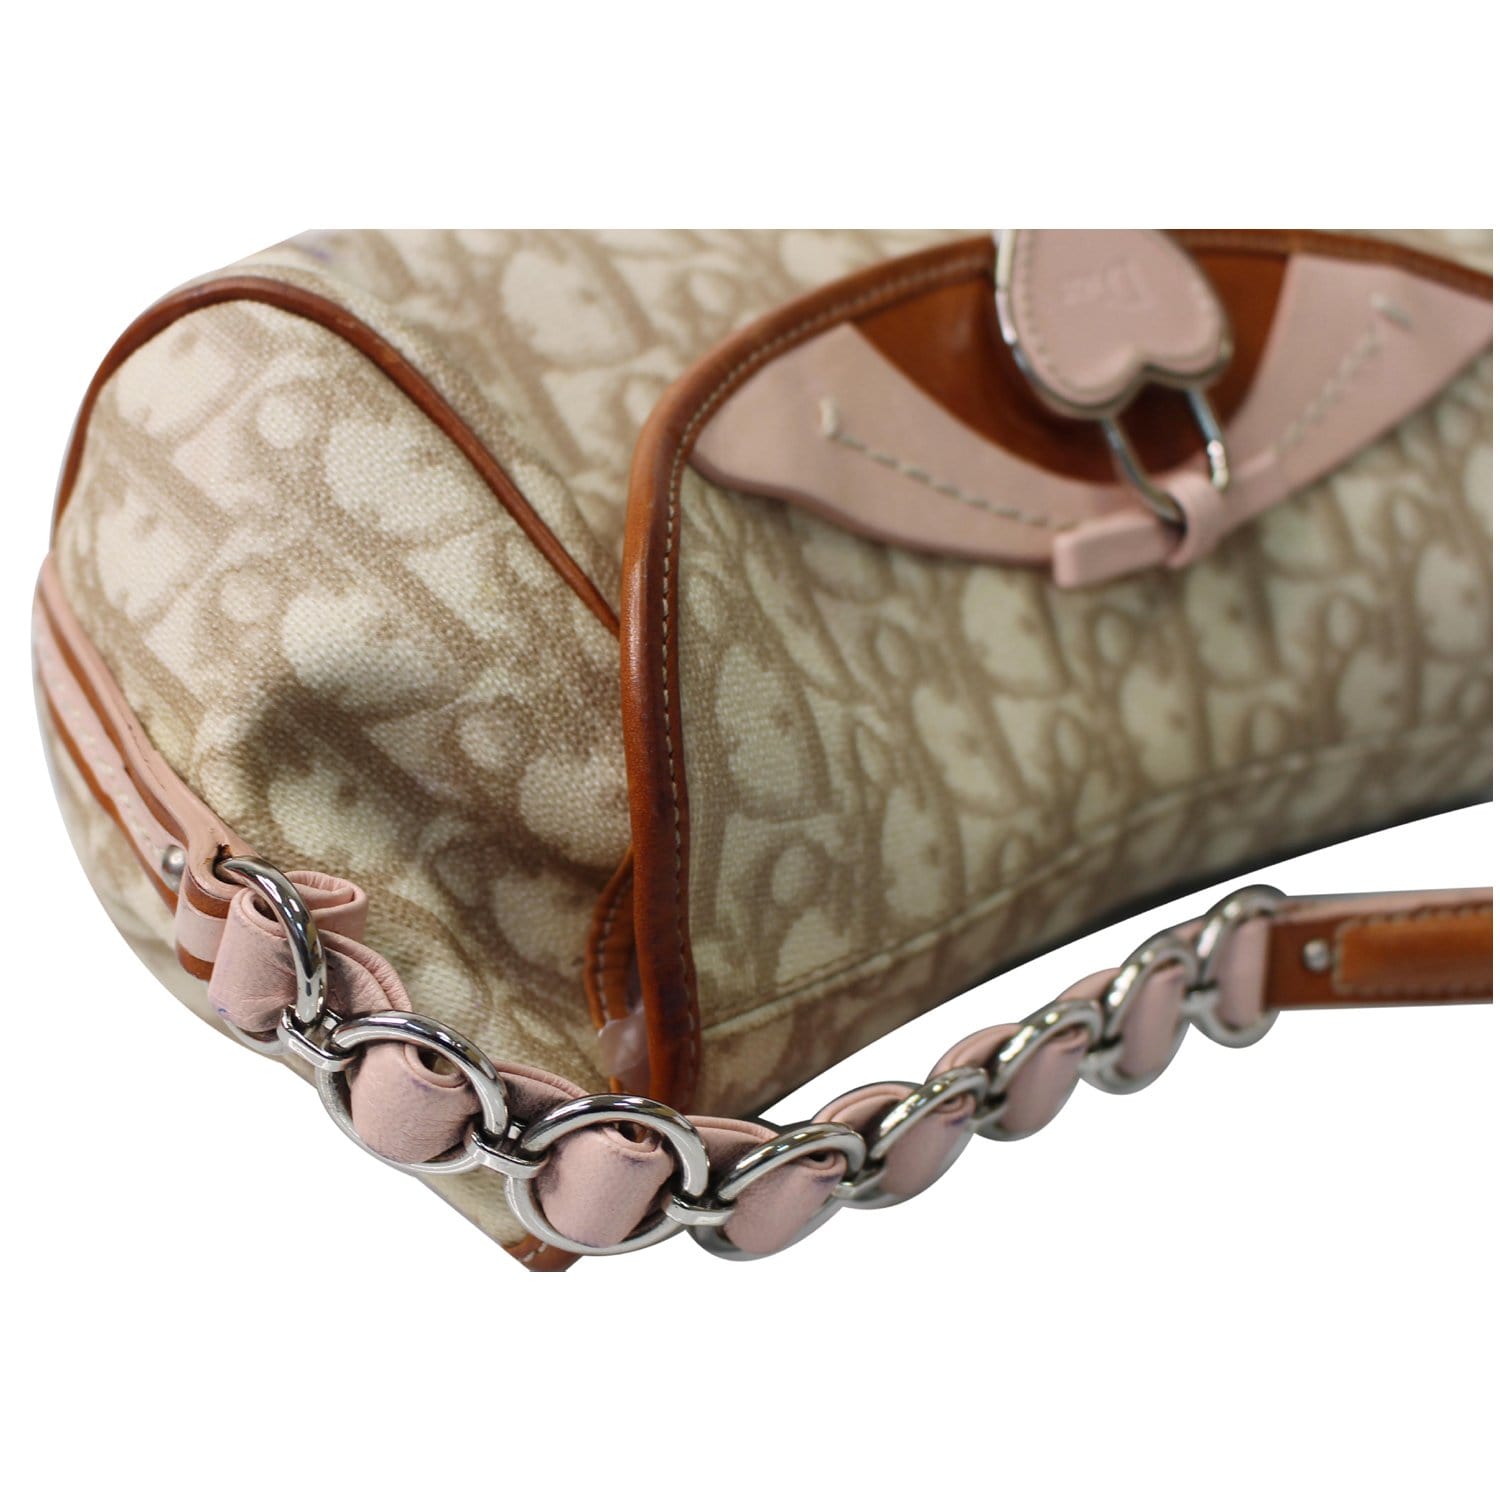 Christian Dior Authentic Vintage Brown Trotter Alma Handbag 